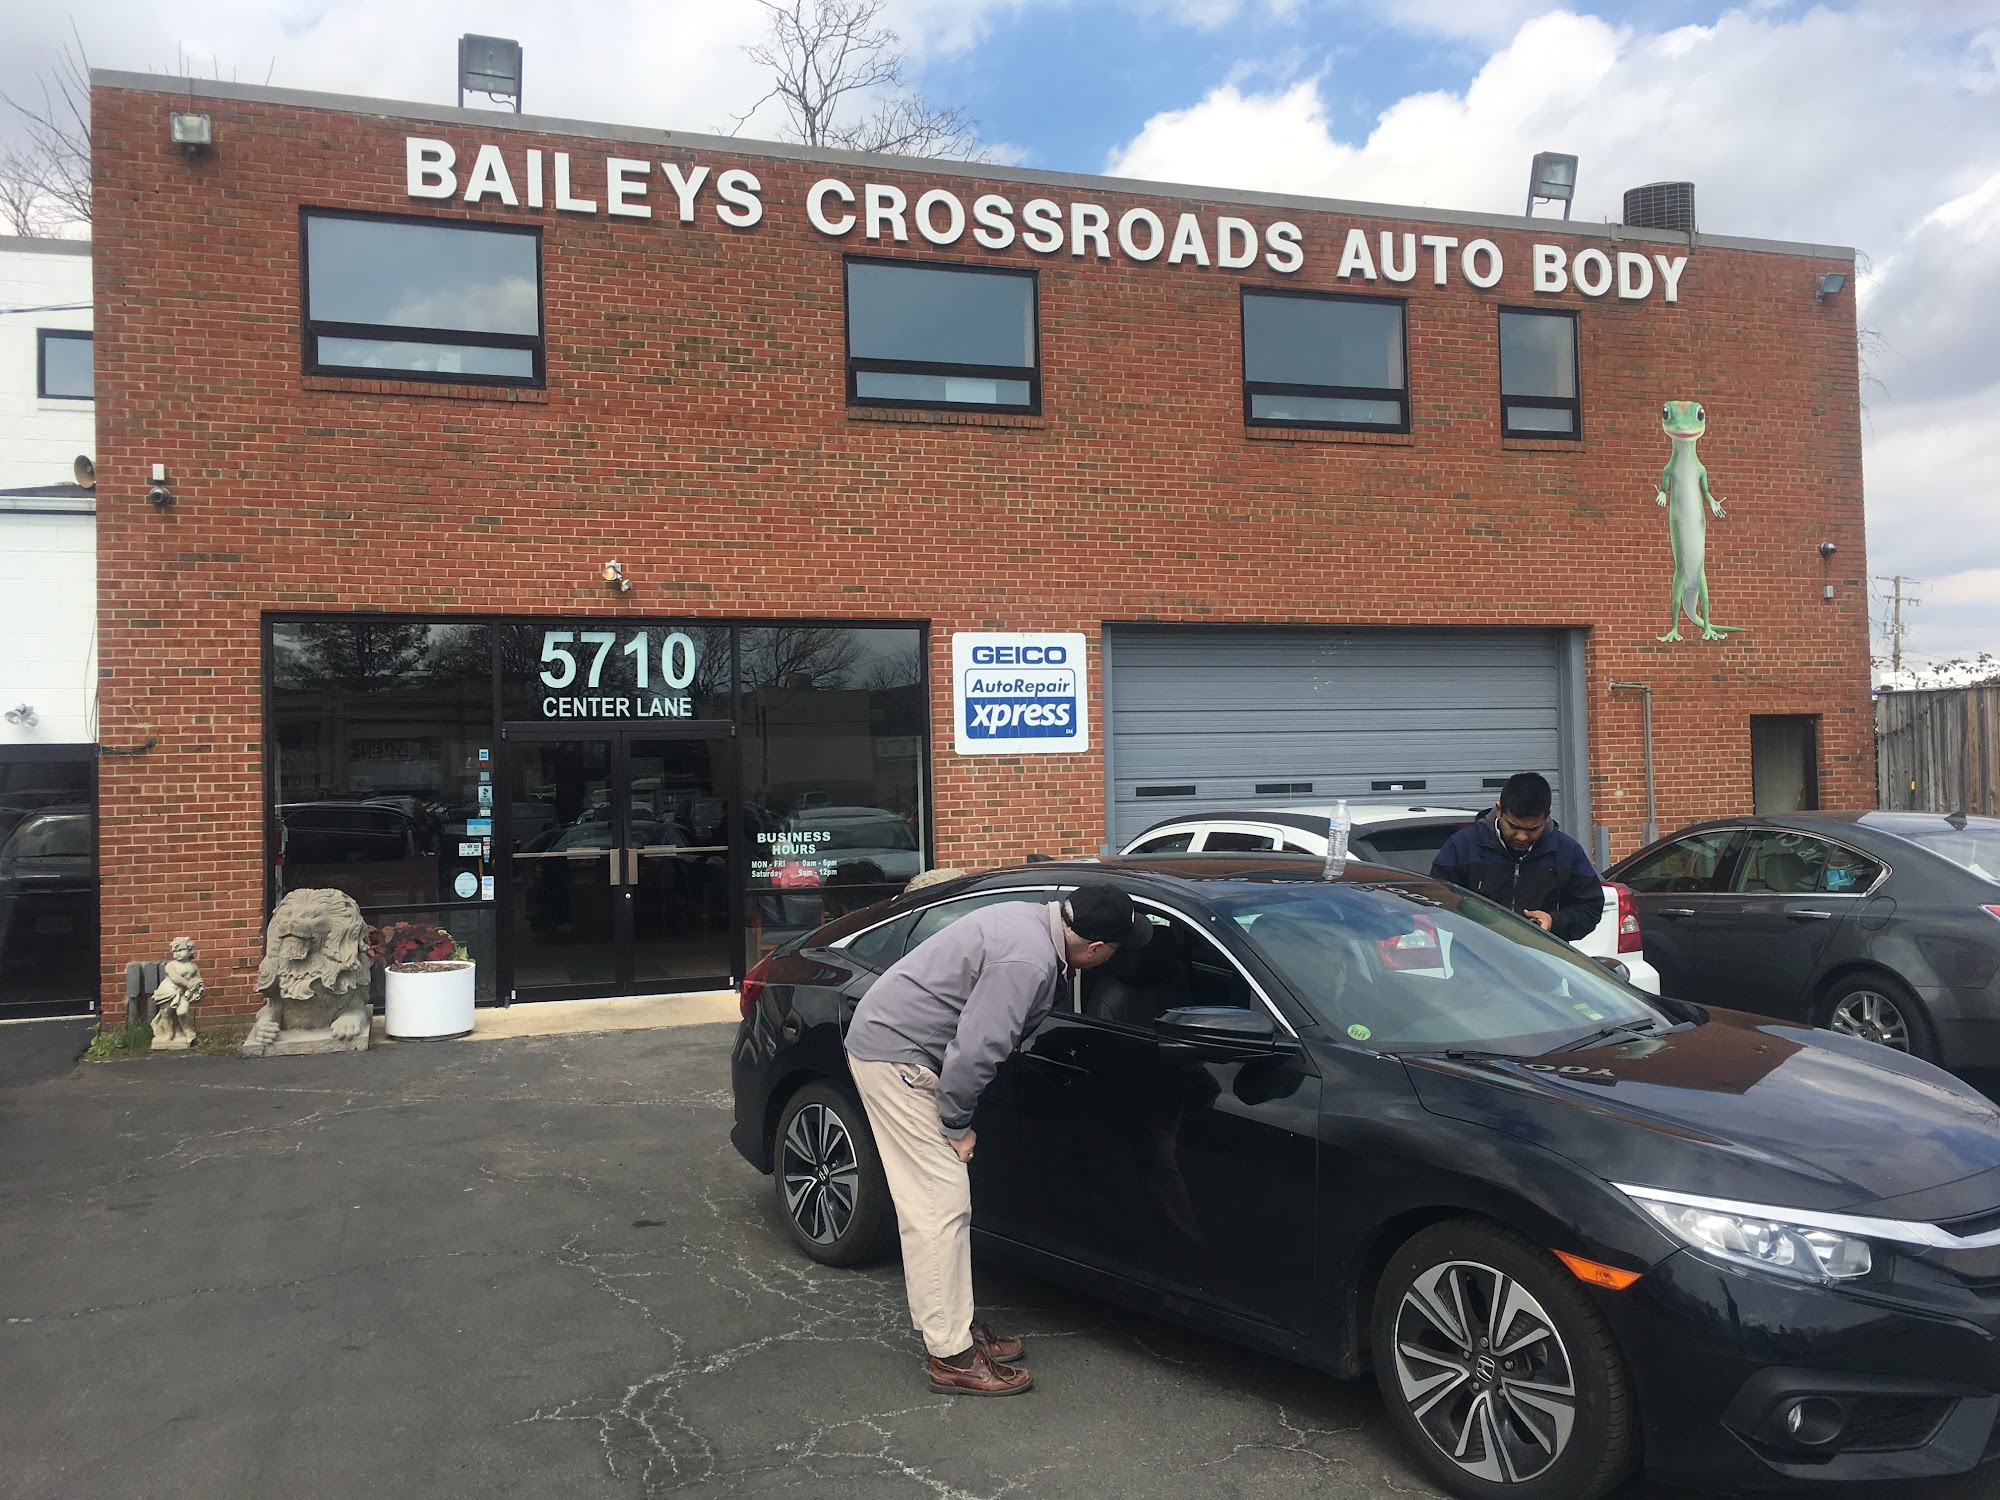 Bailey's Crossroads Auto Body